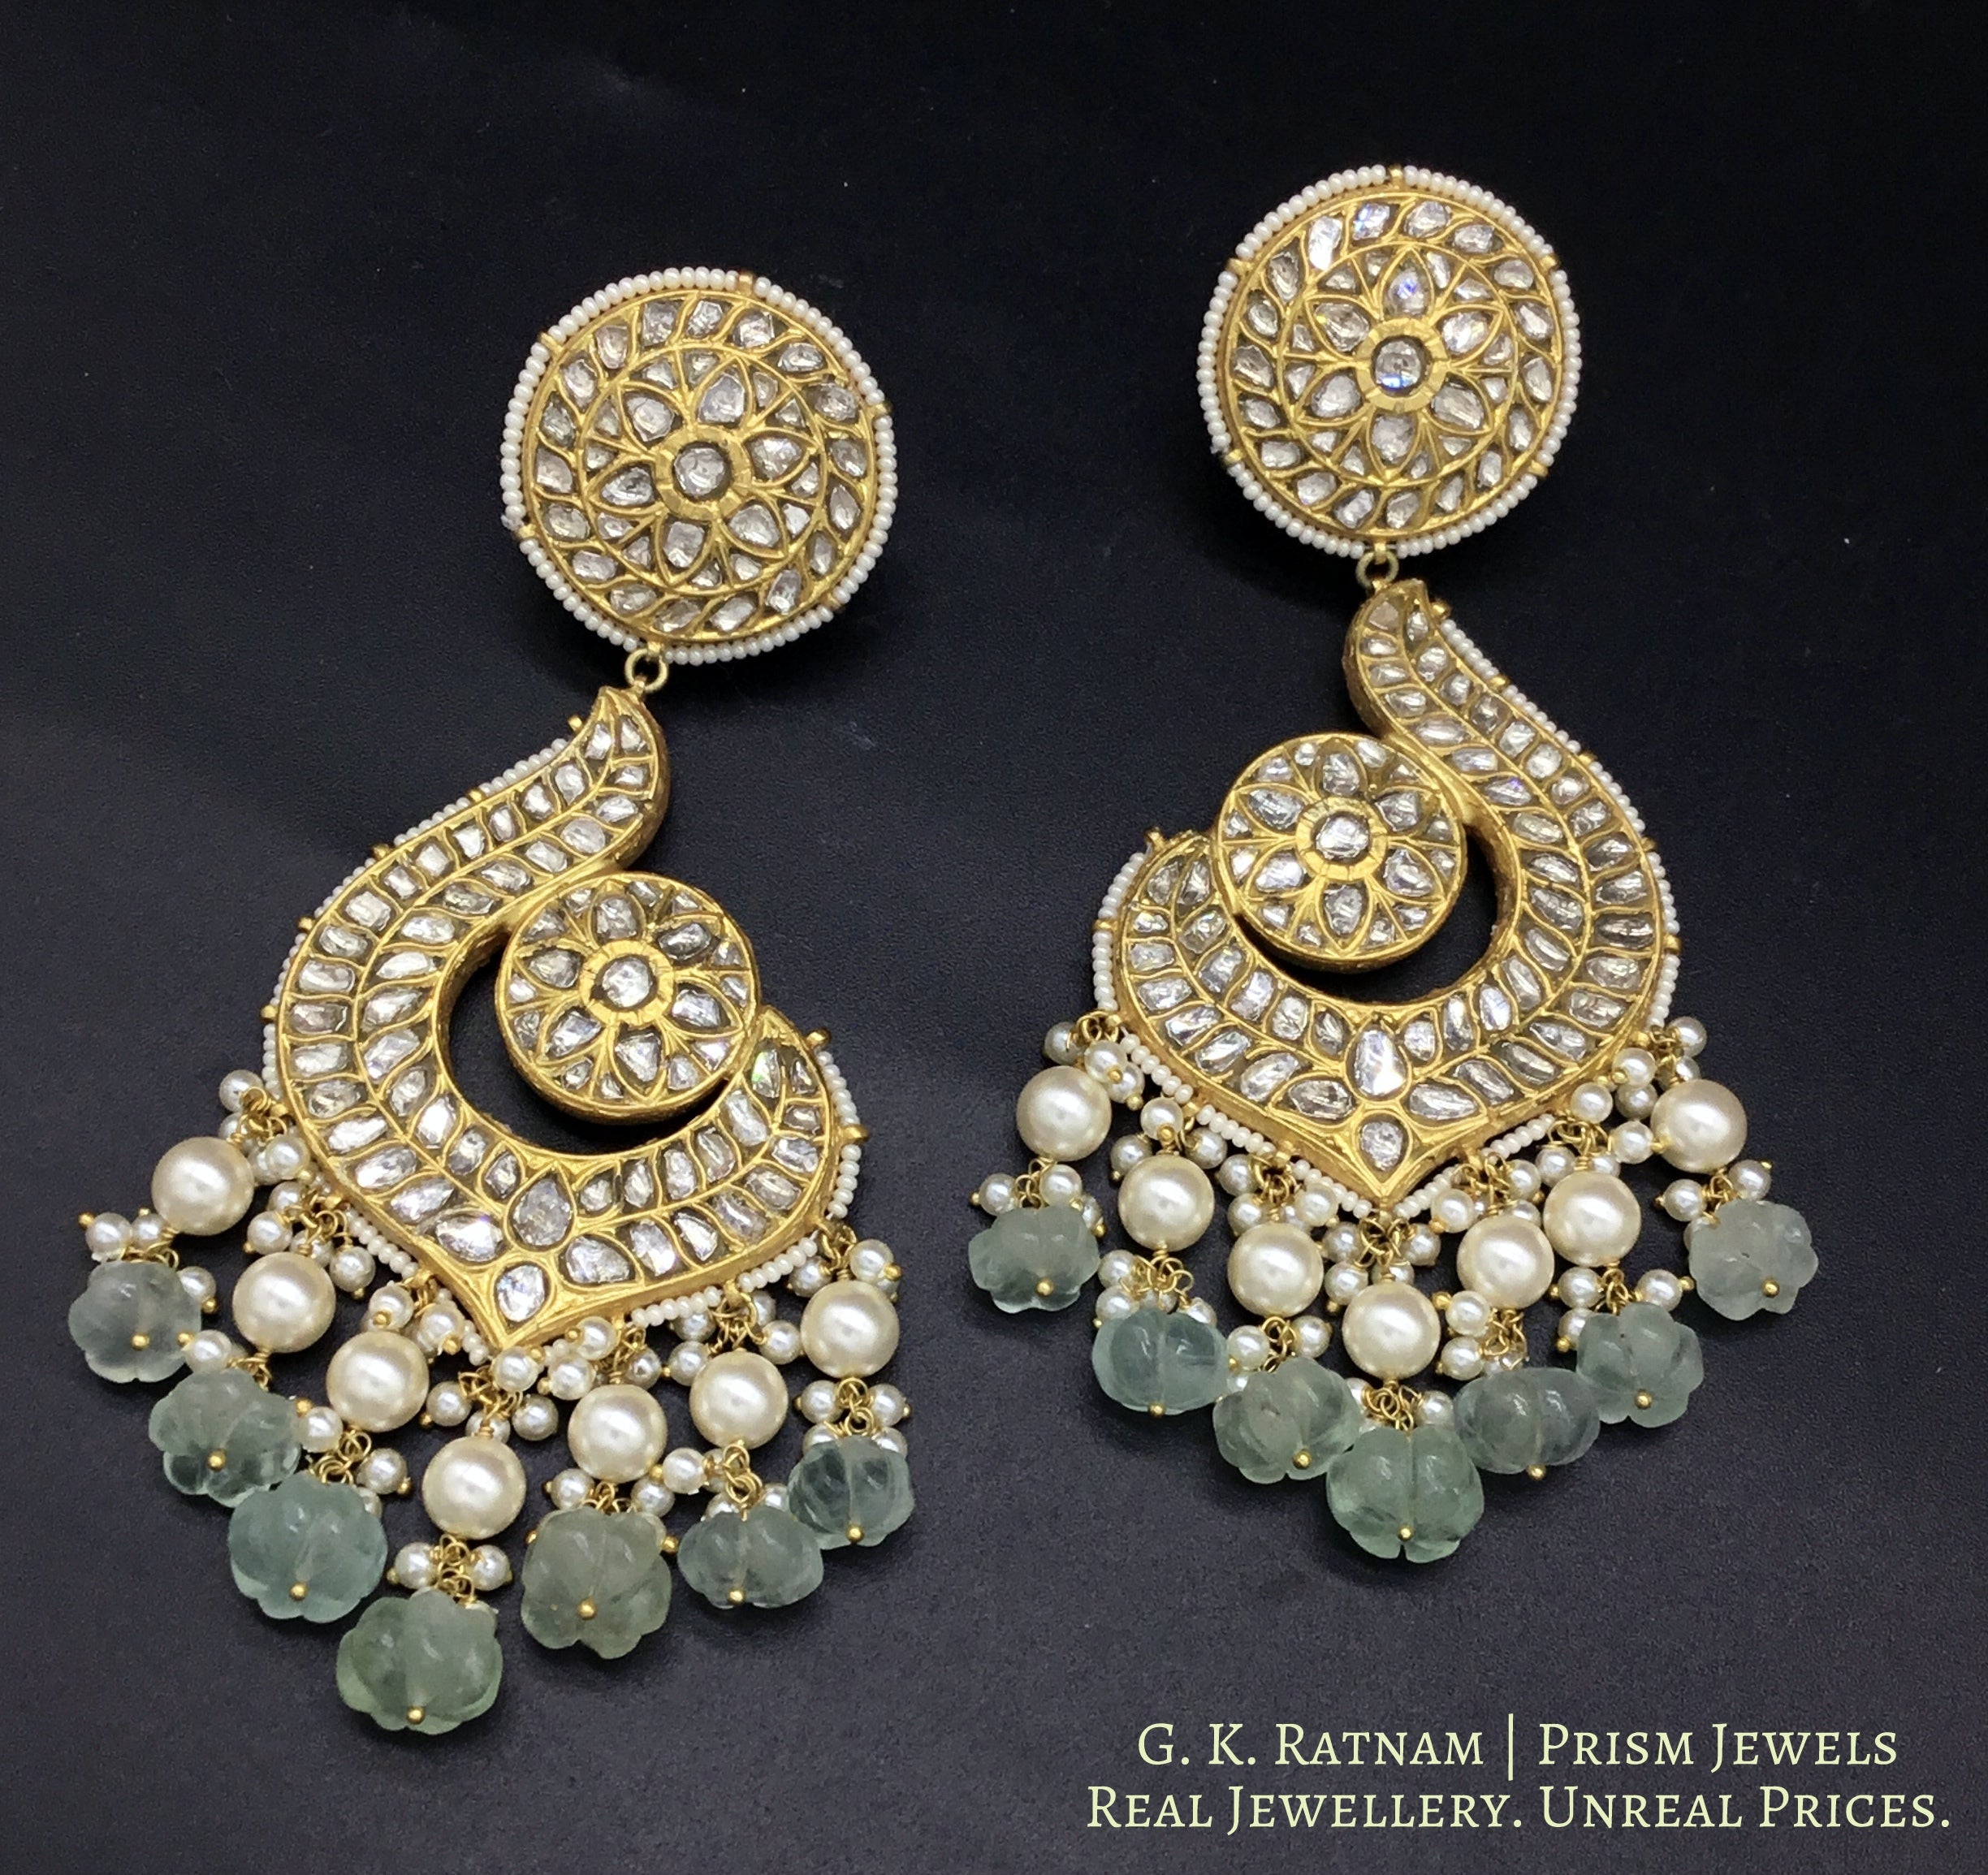 23k Gold and Diamond Polki Chand Bali Earring Pair with Green Fluorite Melons - gold diamond polki kundan meena jadau jewellery